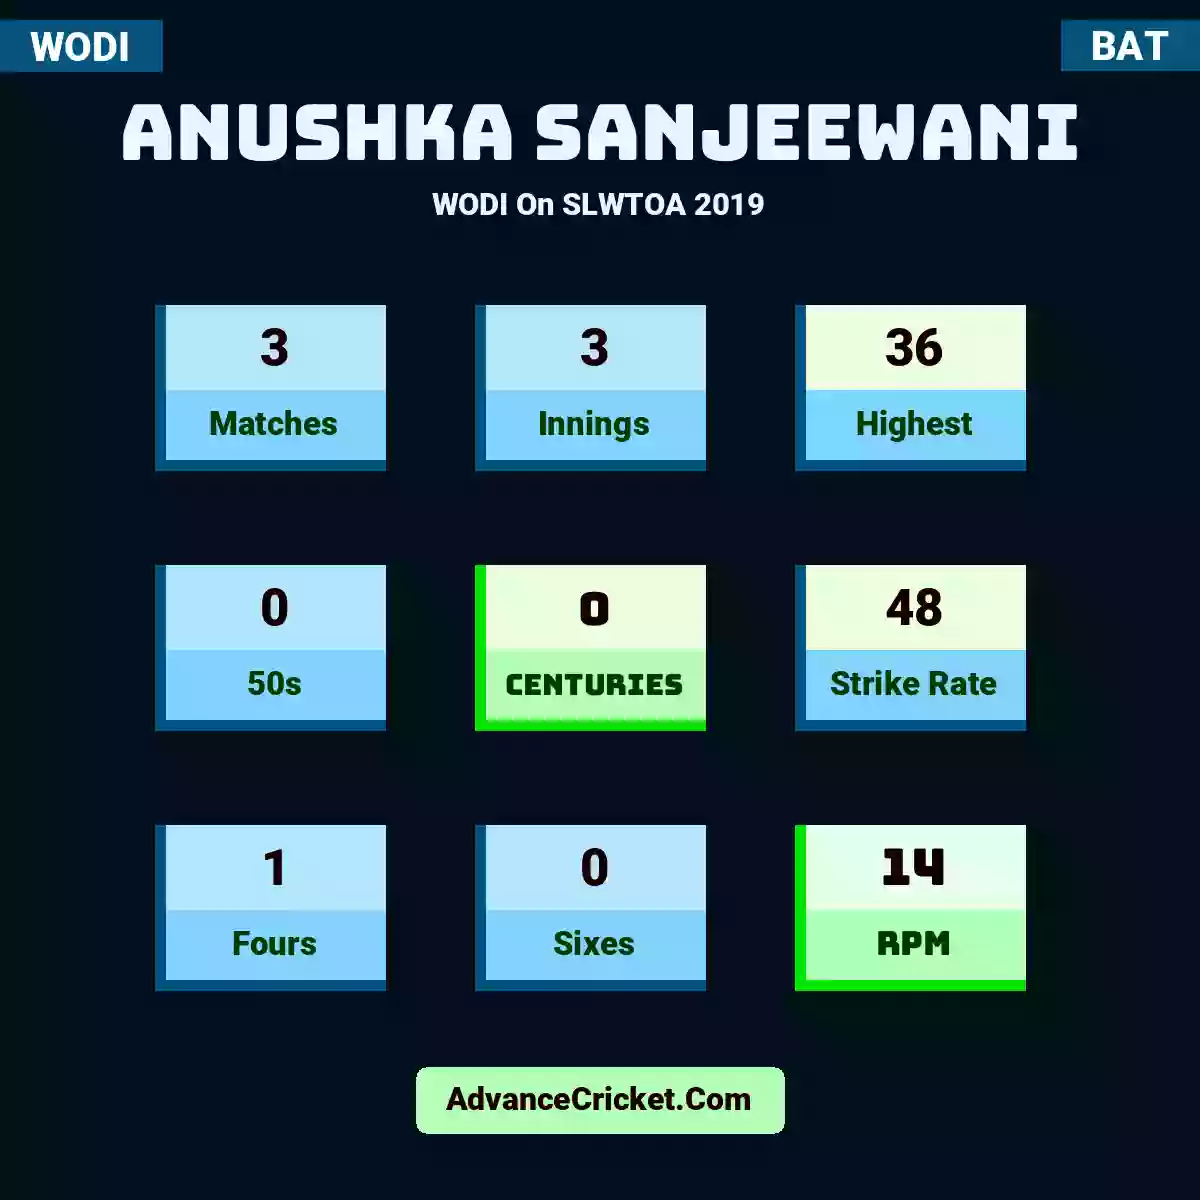 Anushka Sanjeewani WODI  On SLWTOA 2019, Anushka Sanjeewani played 3 matches, scored 36 runs as highest, 0 half-centuries, and 0 centuries, with a strike rate of 48. A.Sanjeewani hit 1 fours and 0 sixes, with an RPM of 14.